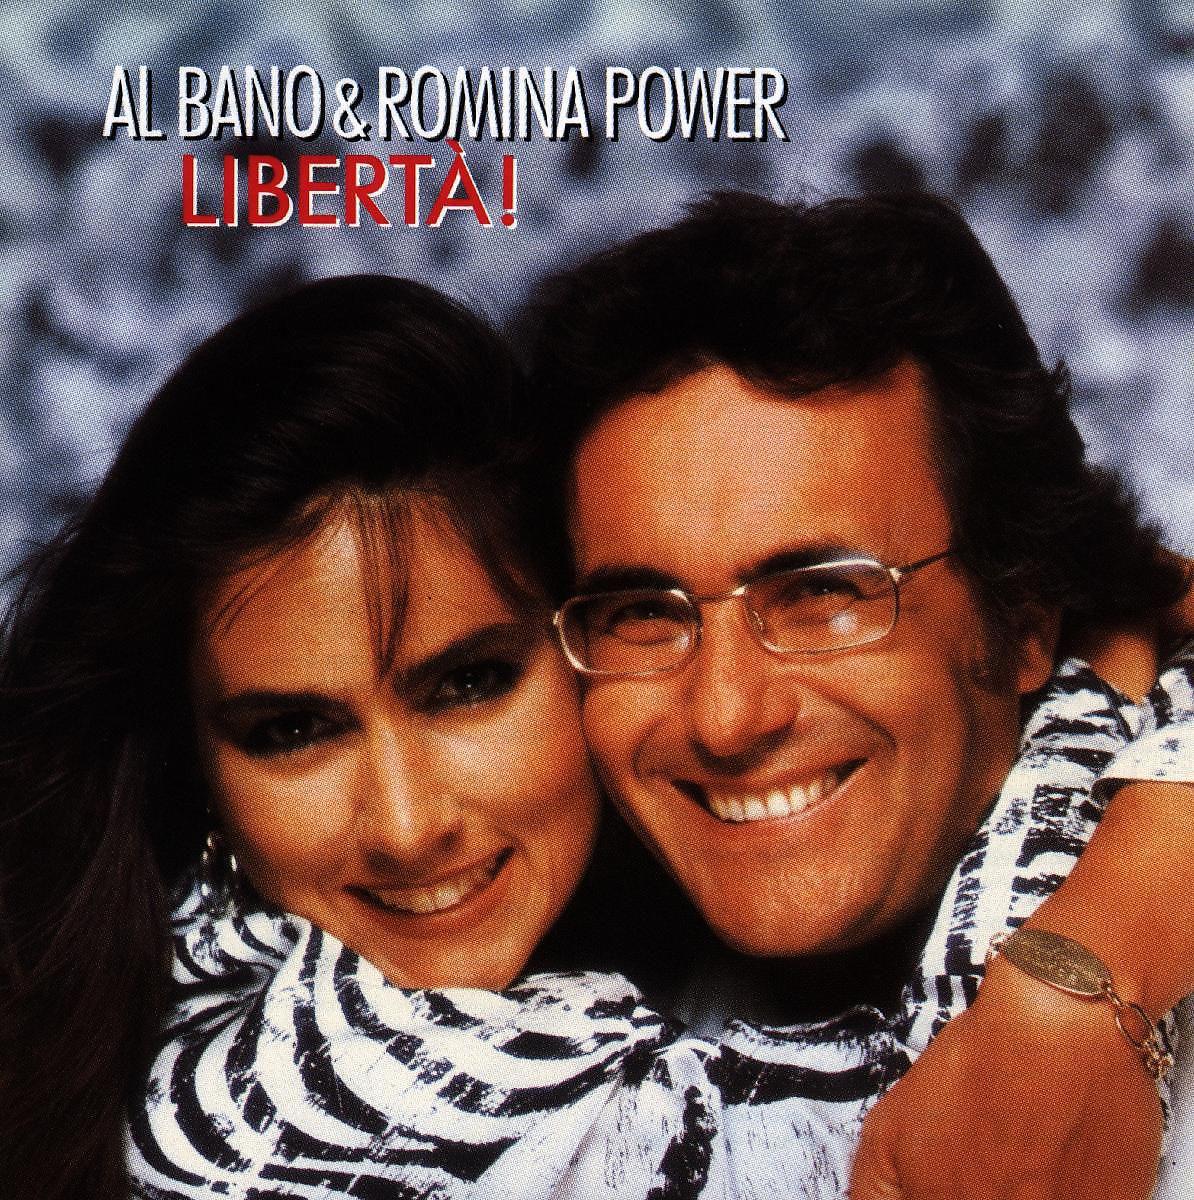 Liberta аль бано ромина. Аль Бано и Ромина Пауэр. Аль Бано и Ромина Liberta. Al bano & Romina Power Liberta 1987 LP. Аль Бано и Ромина - Либерта.